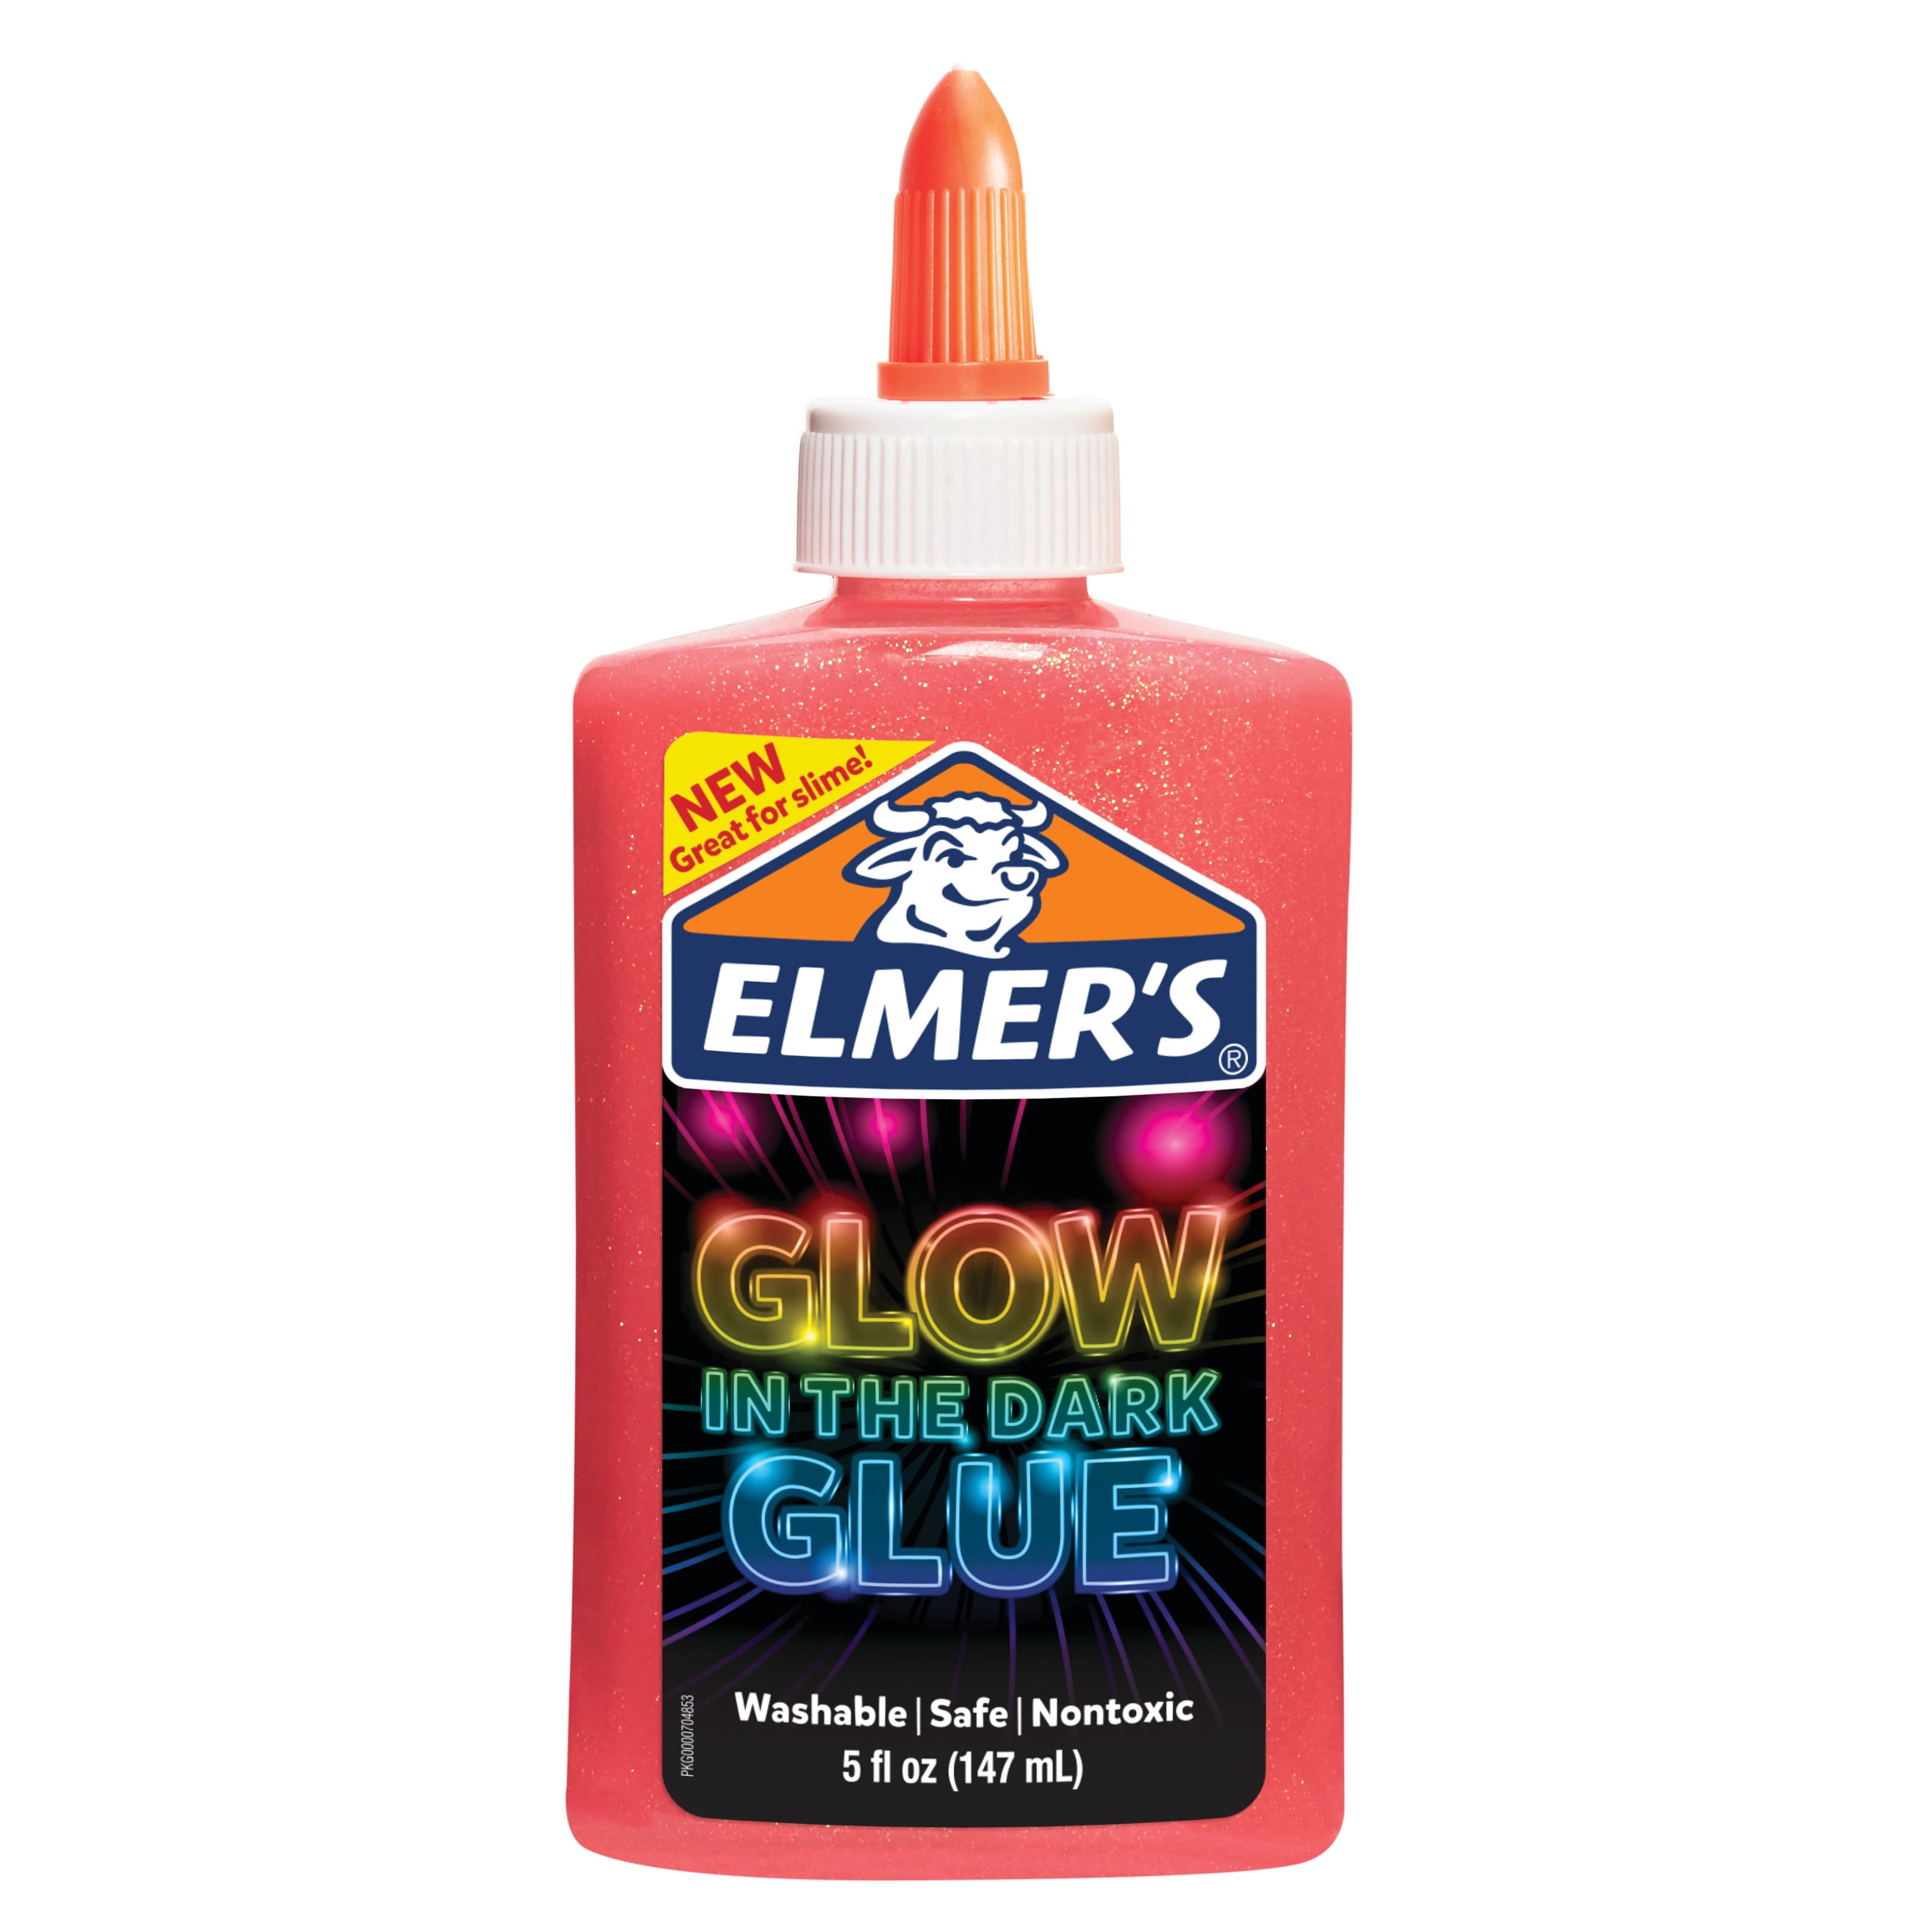 3 Pack Elmers Glow In The Dark Glue PINK 5 oz each Great for SLIME